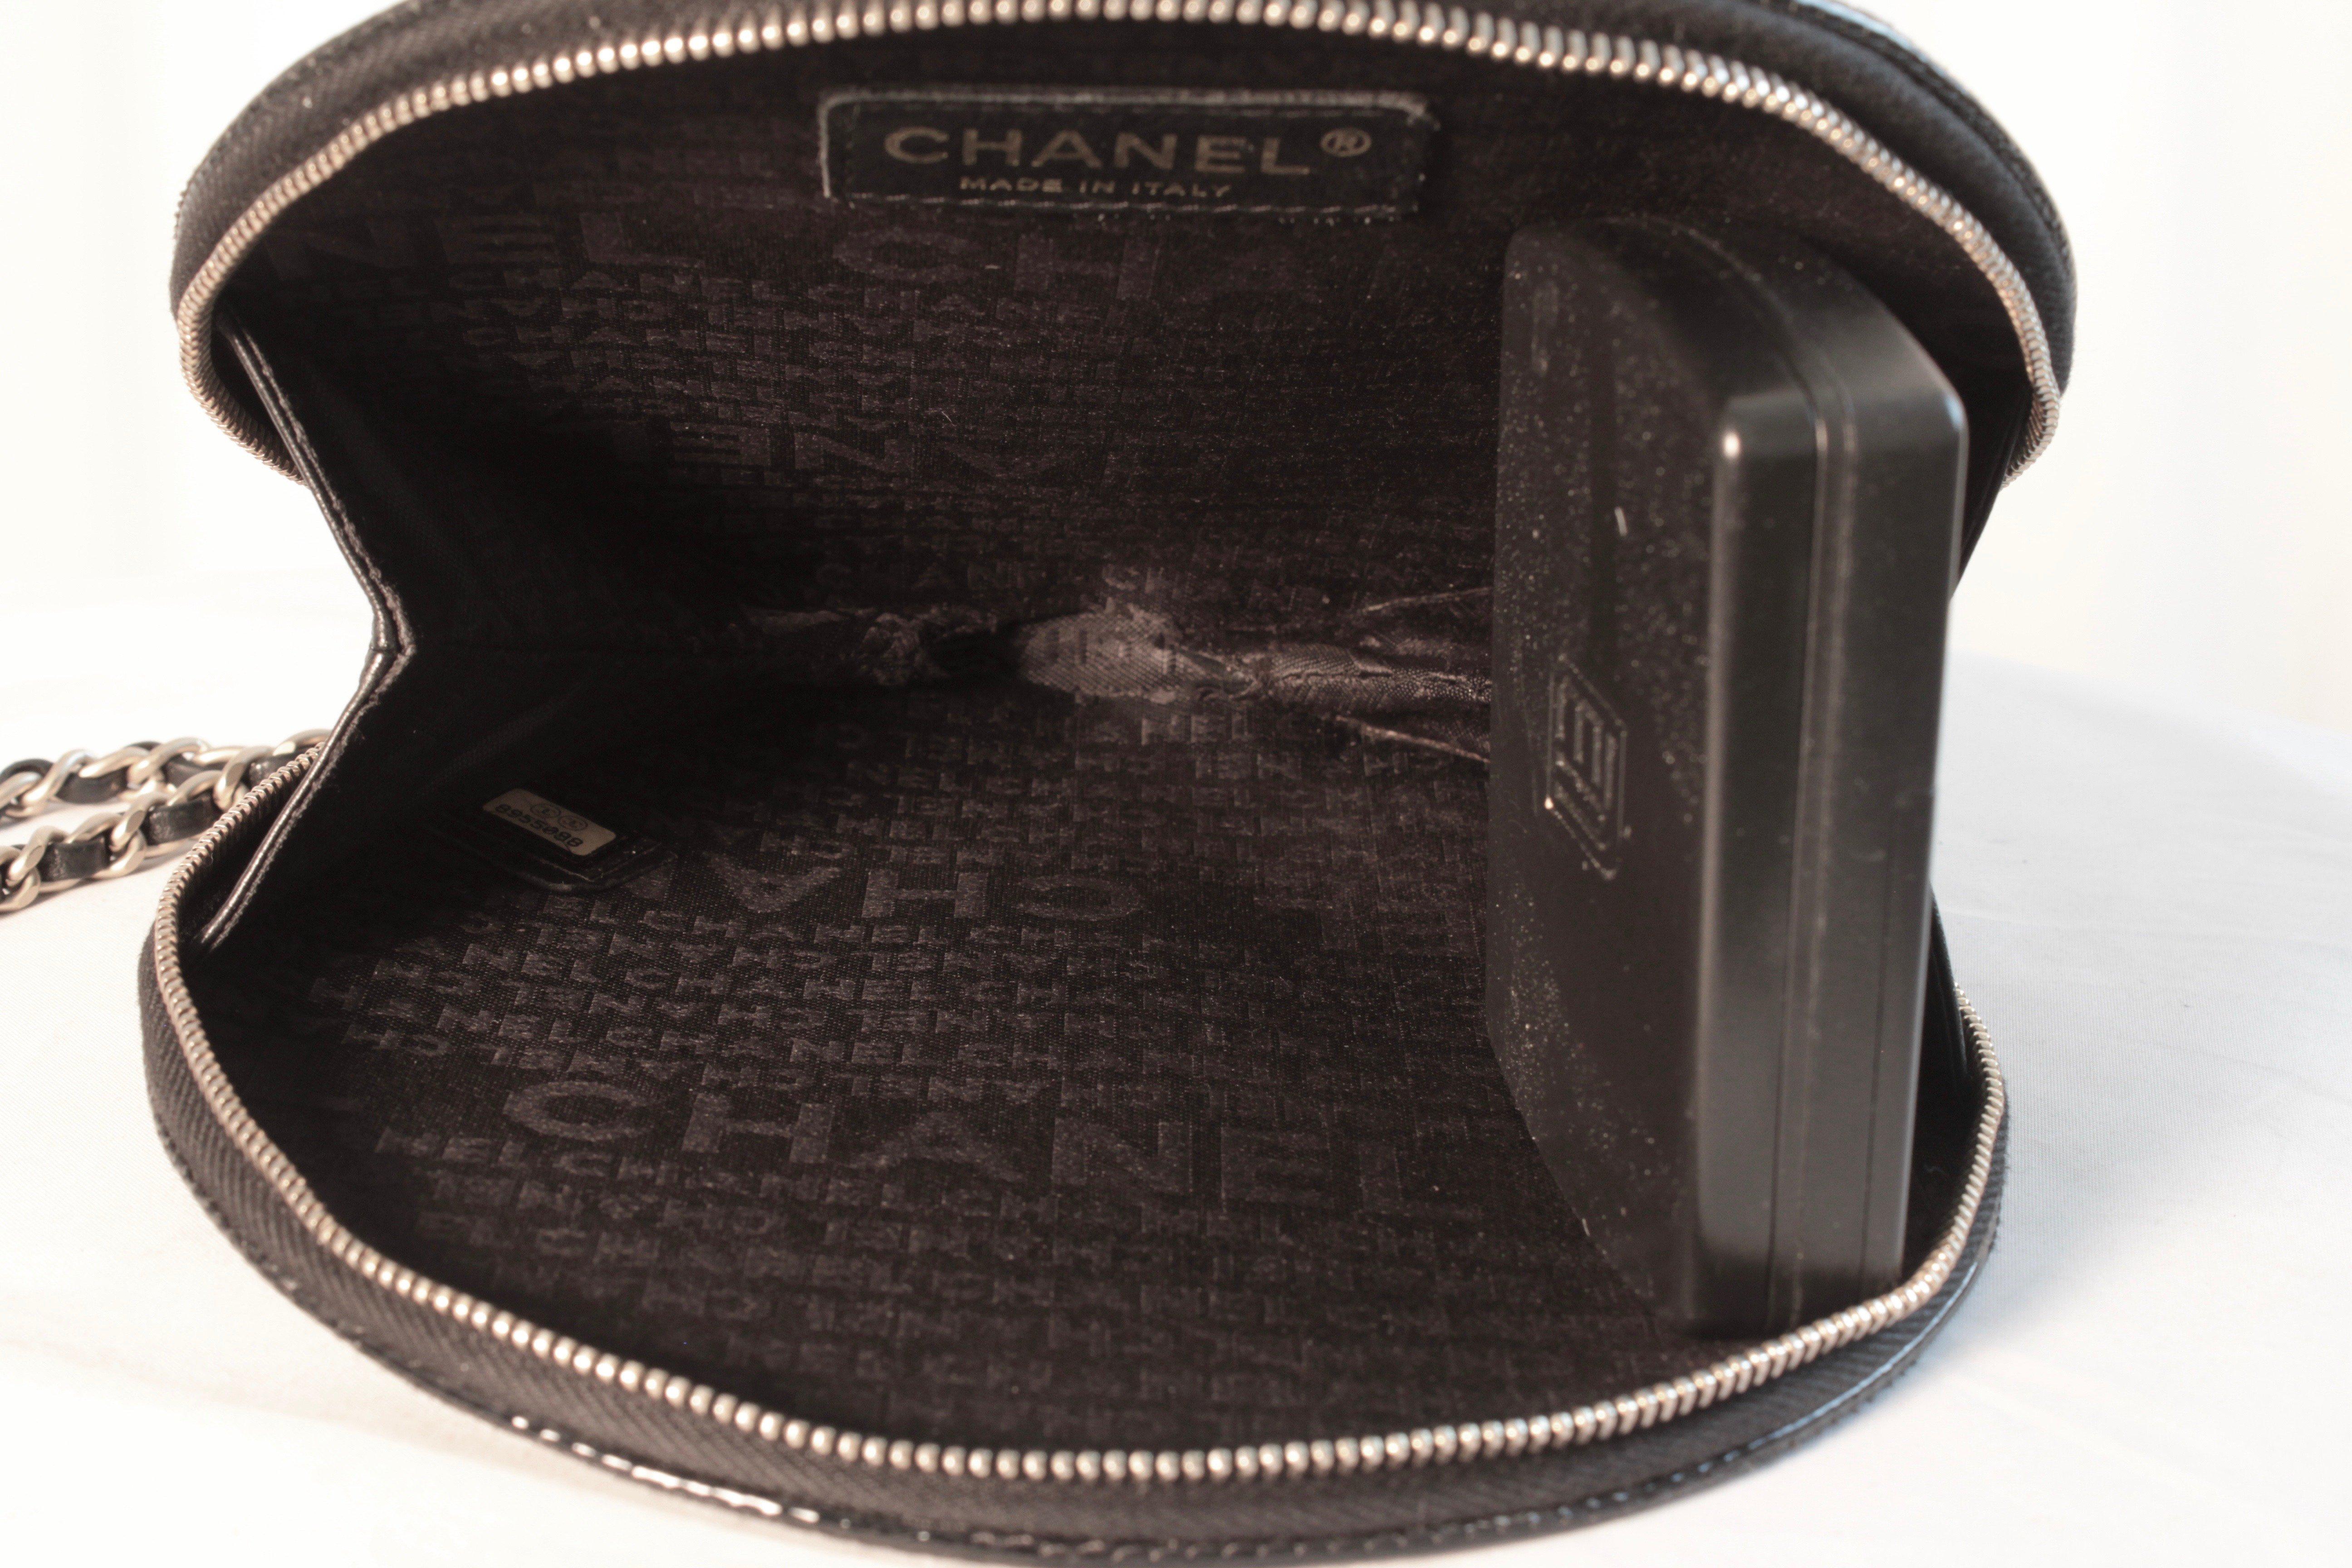 Black Chanel Patent Leather Ltd Ed Record Bag Evening Clutch Wristlet, 2004